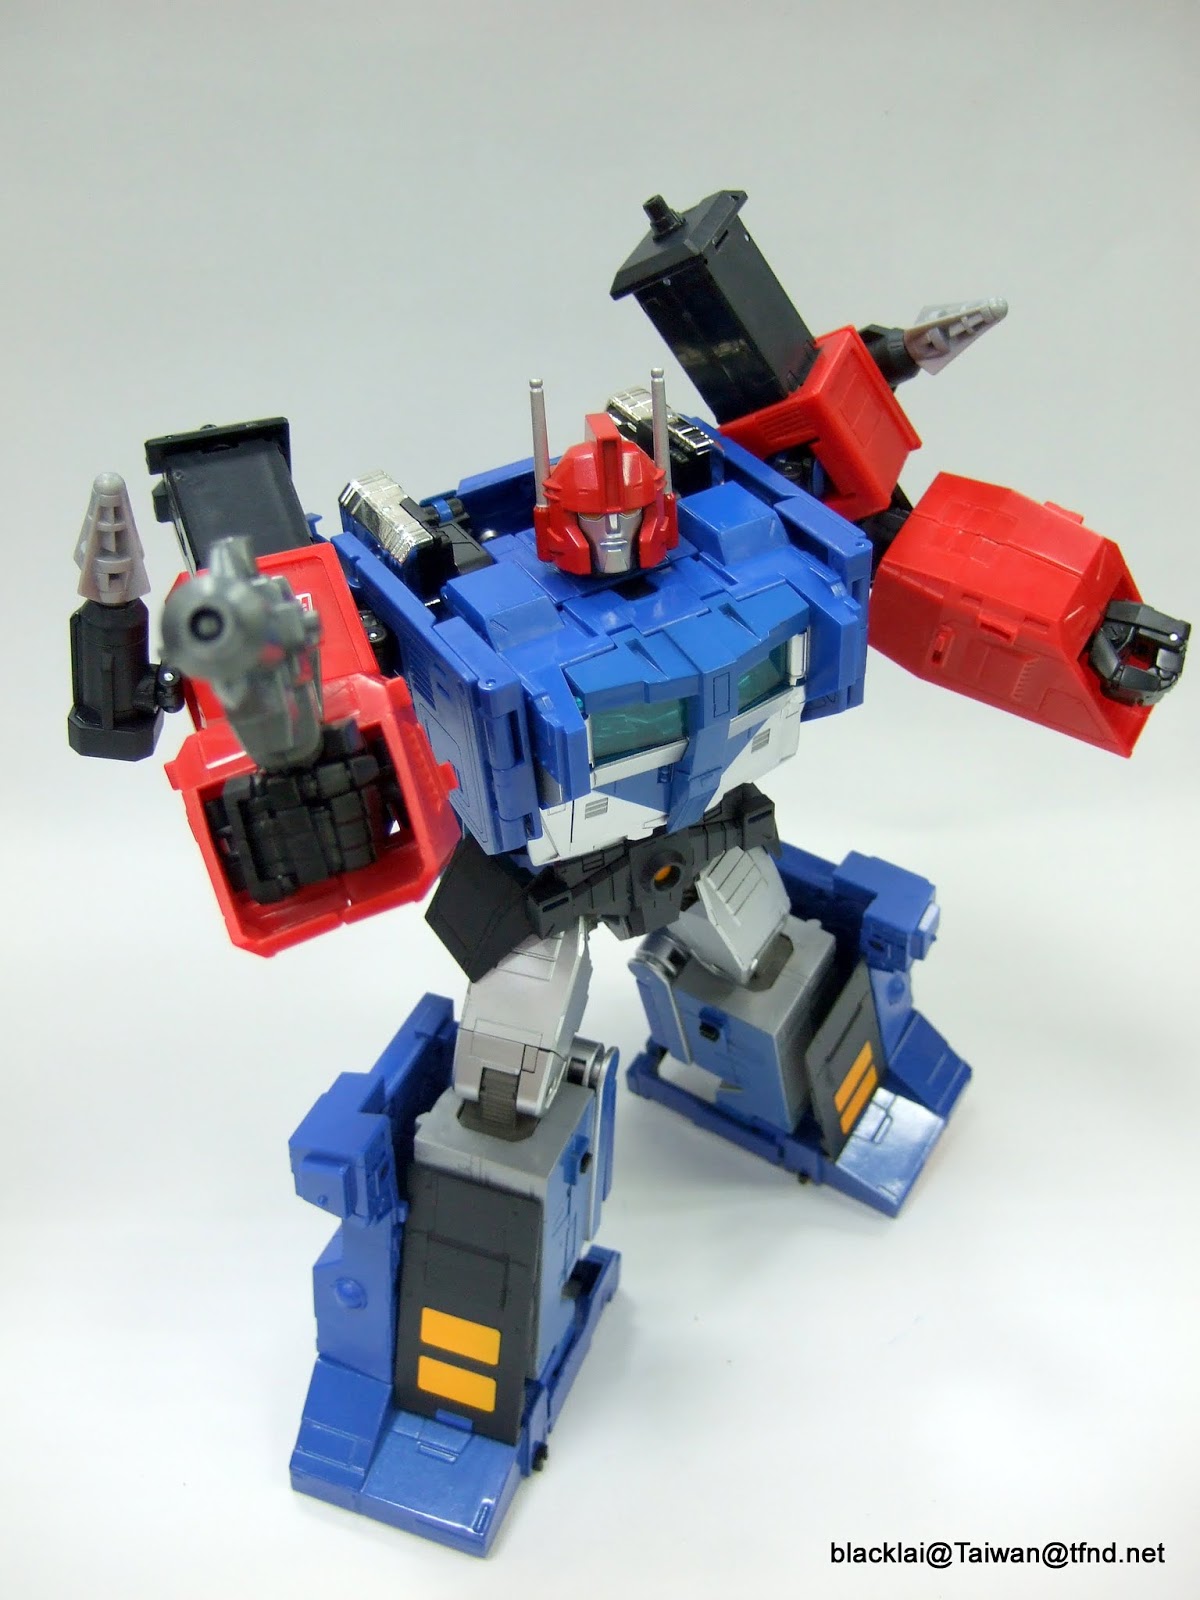 Transformers News: In-Hand Images - TakaraTomy Transformers Masterpiece MP-31 Delta Magnus